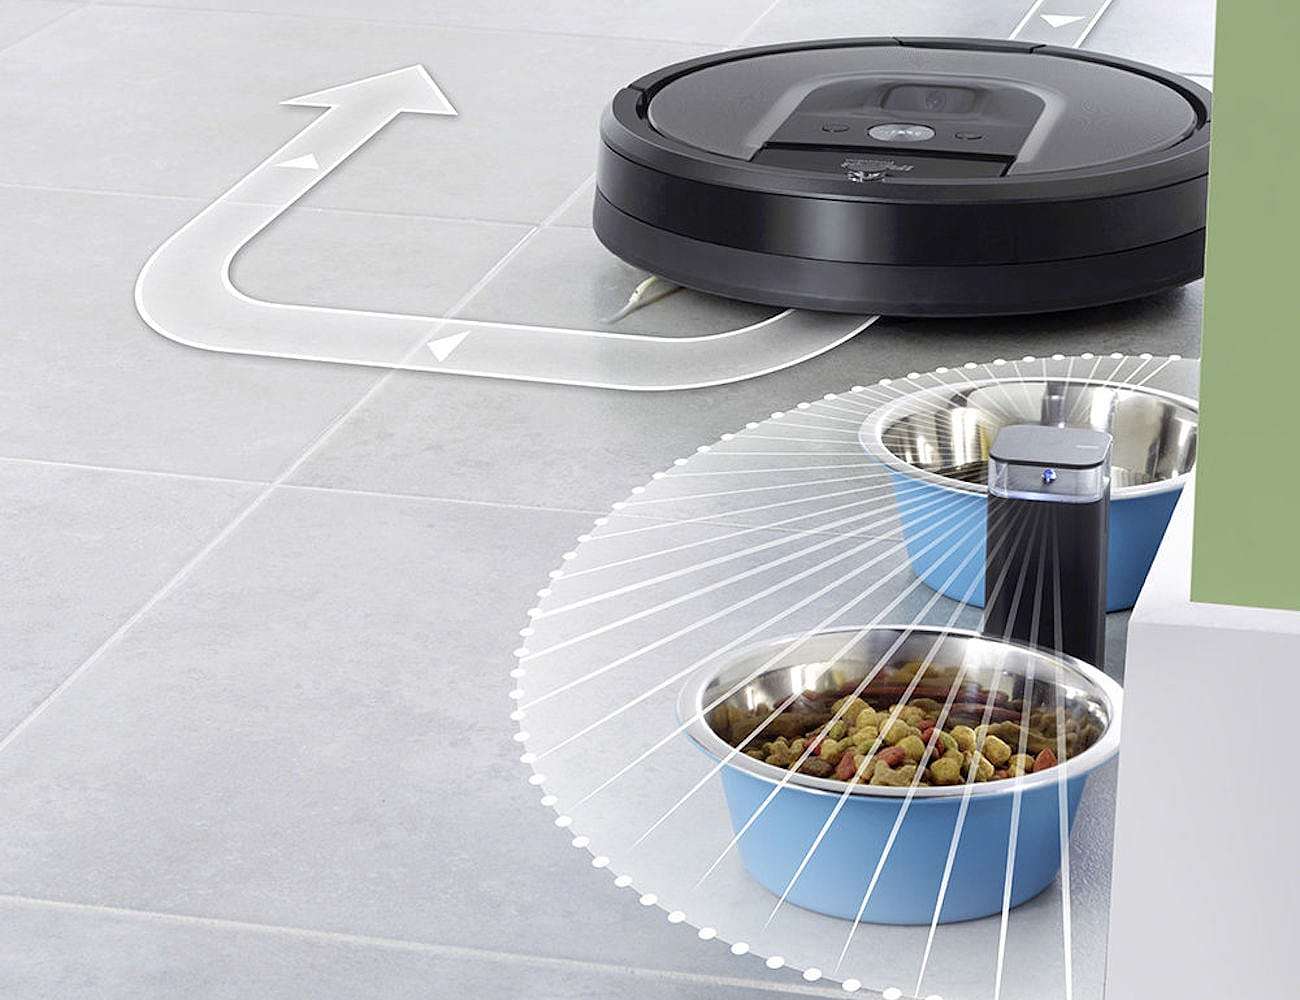 iRobot Roomba，Wi-Fi连接，吸尘器，扫地机器人，